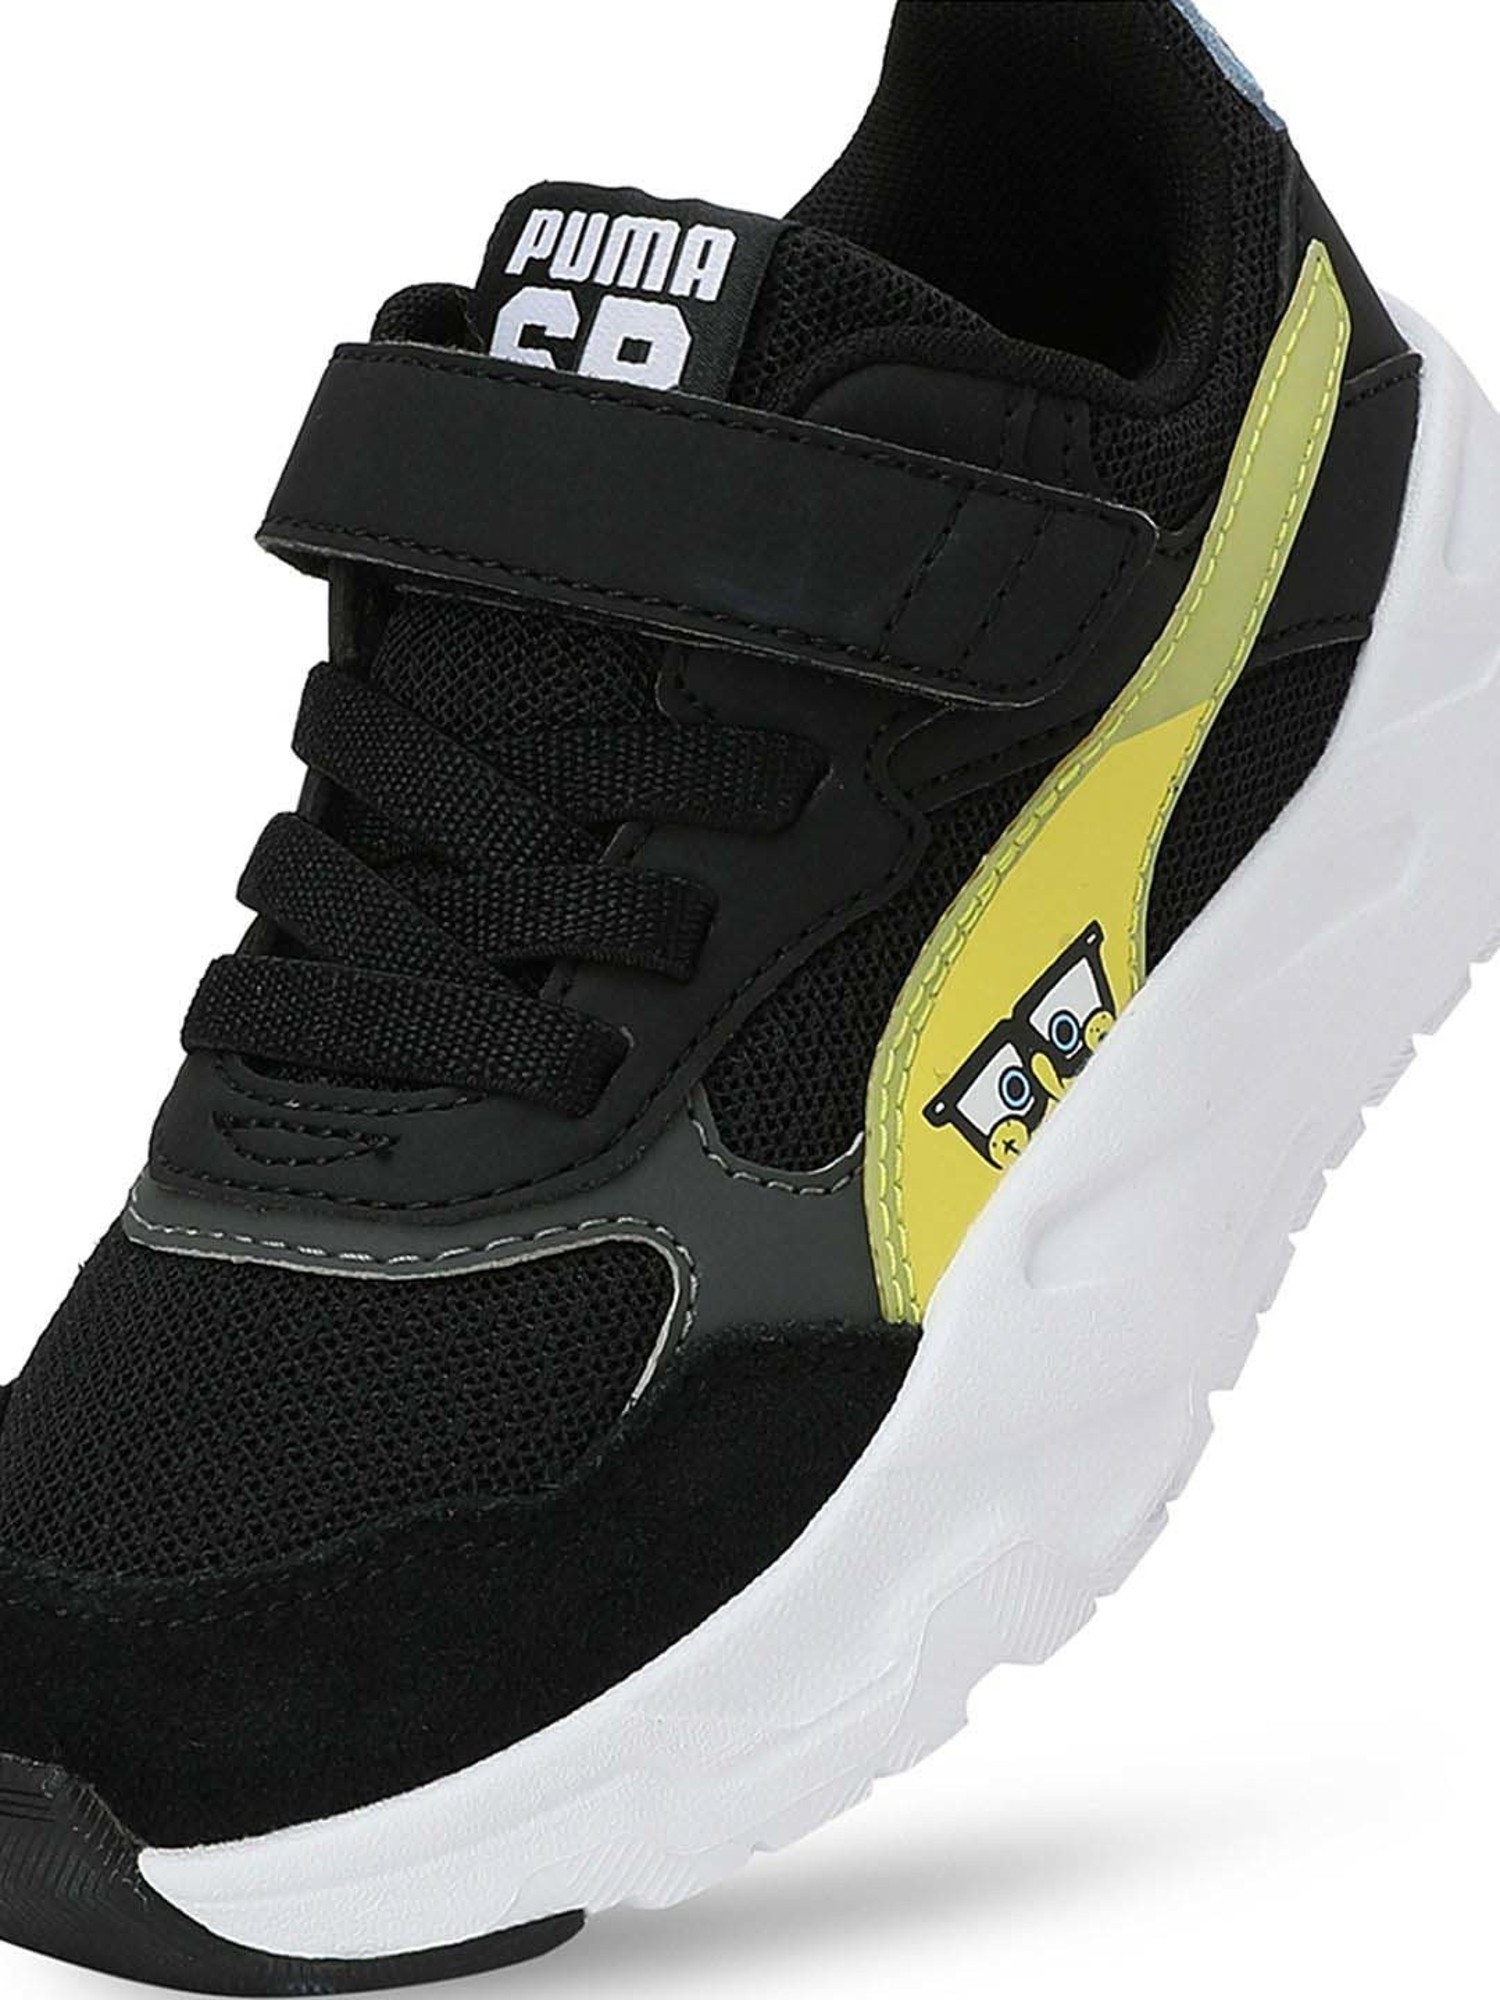 Puma & Best for Trinity Tata Yellow AC+ Spongebob CLiQ Buy PS Black Sneakers Price Casual Kids @ at